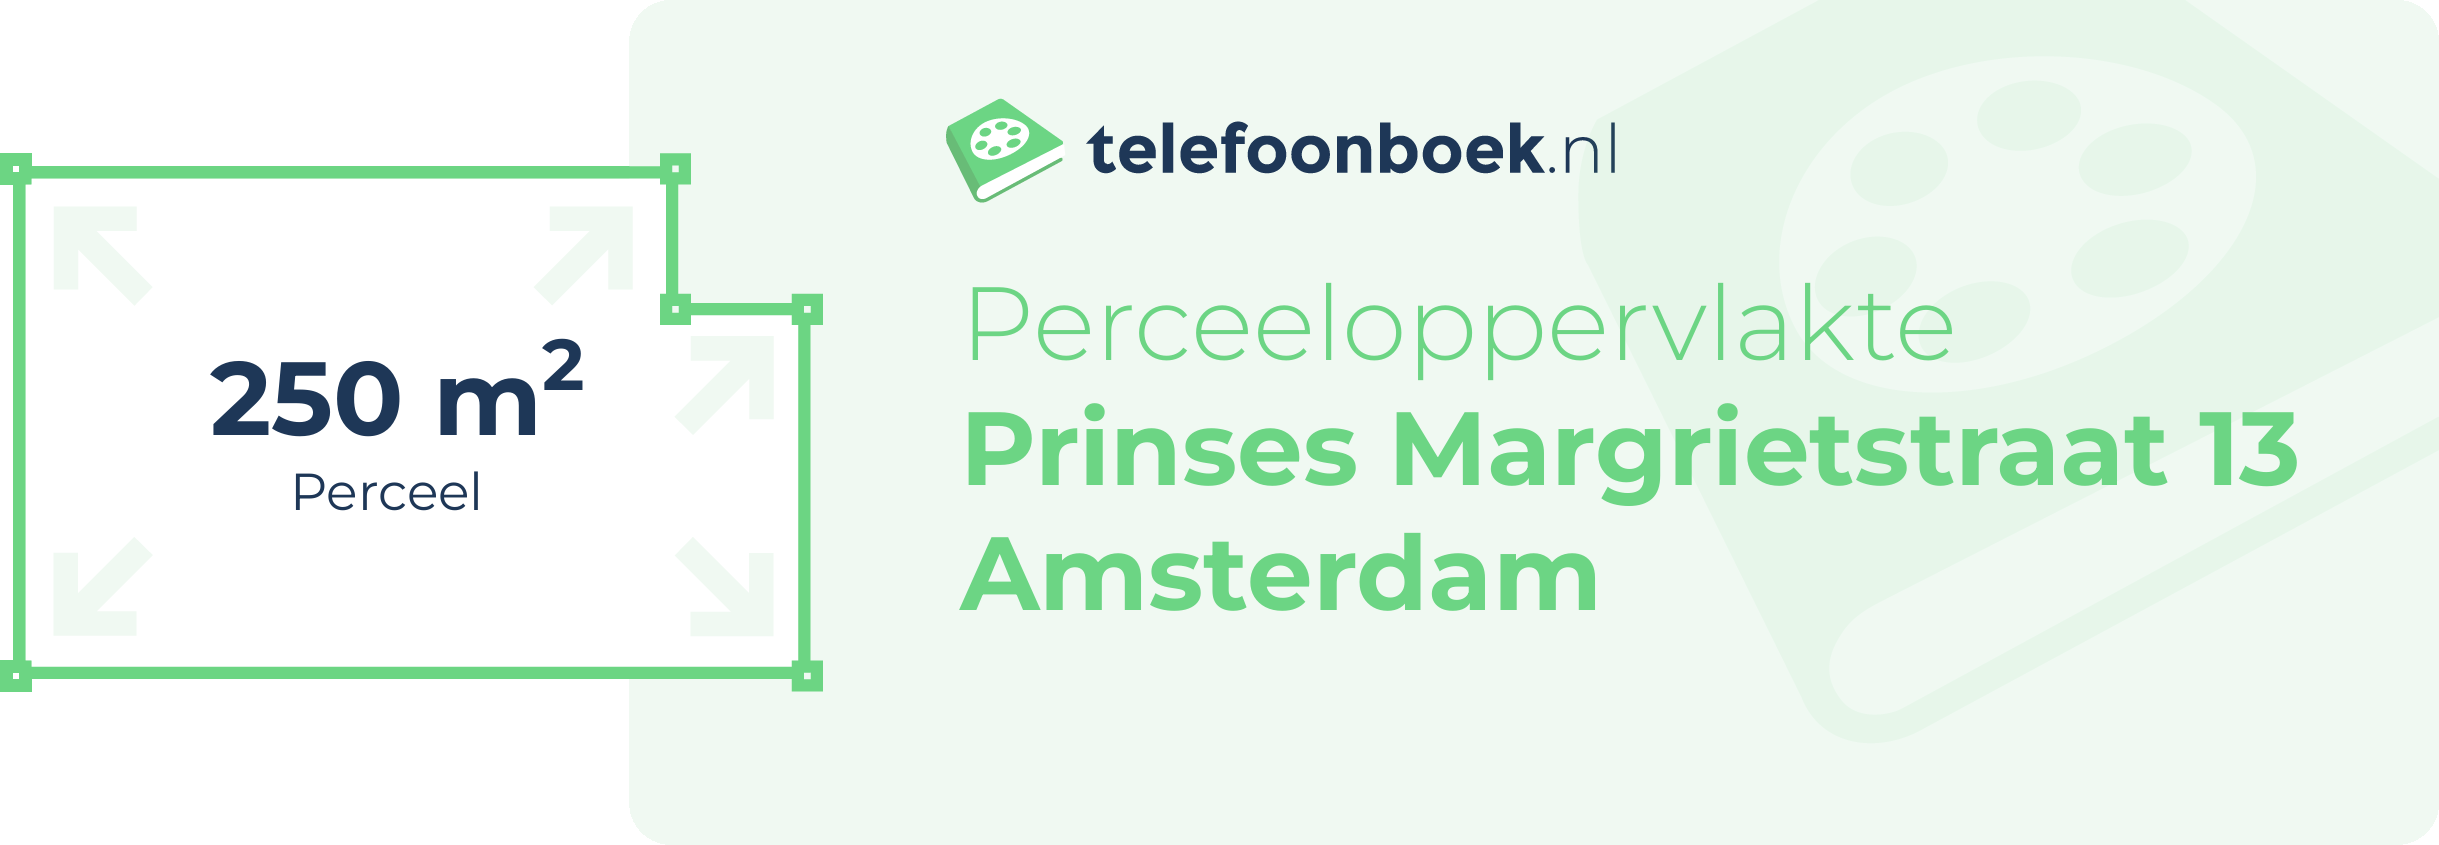 Perceeloppervlakte Prinses Margrietstraat 13 Amsterdam